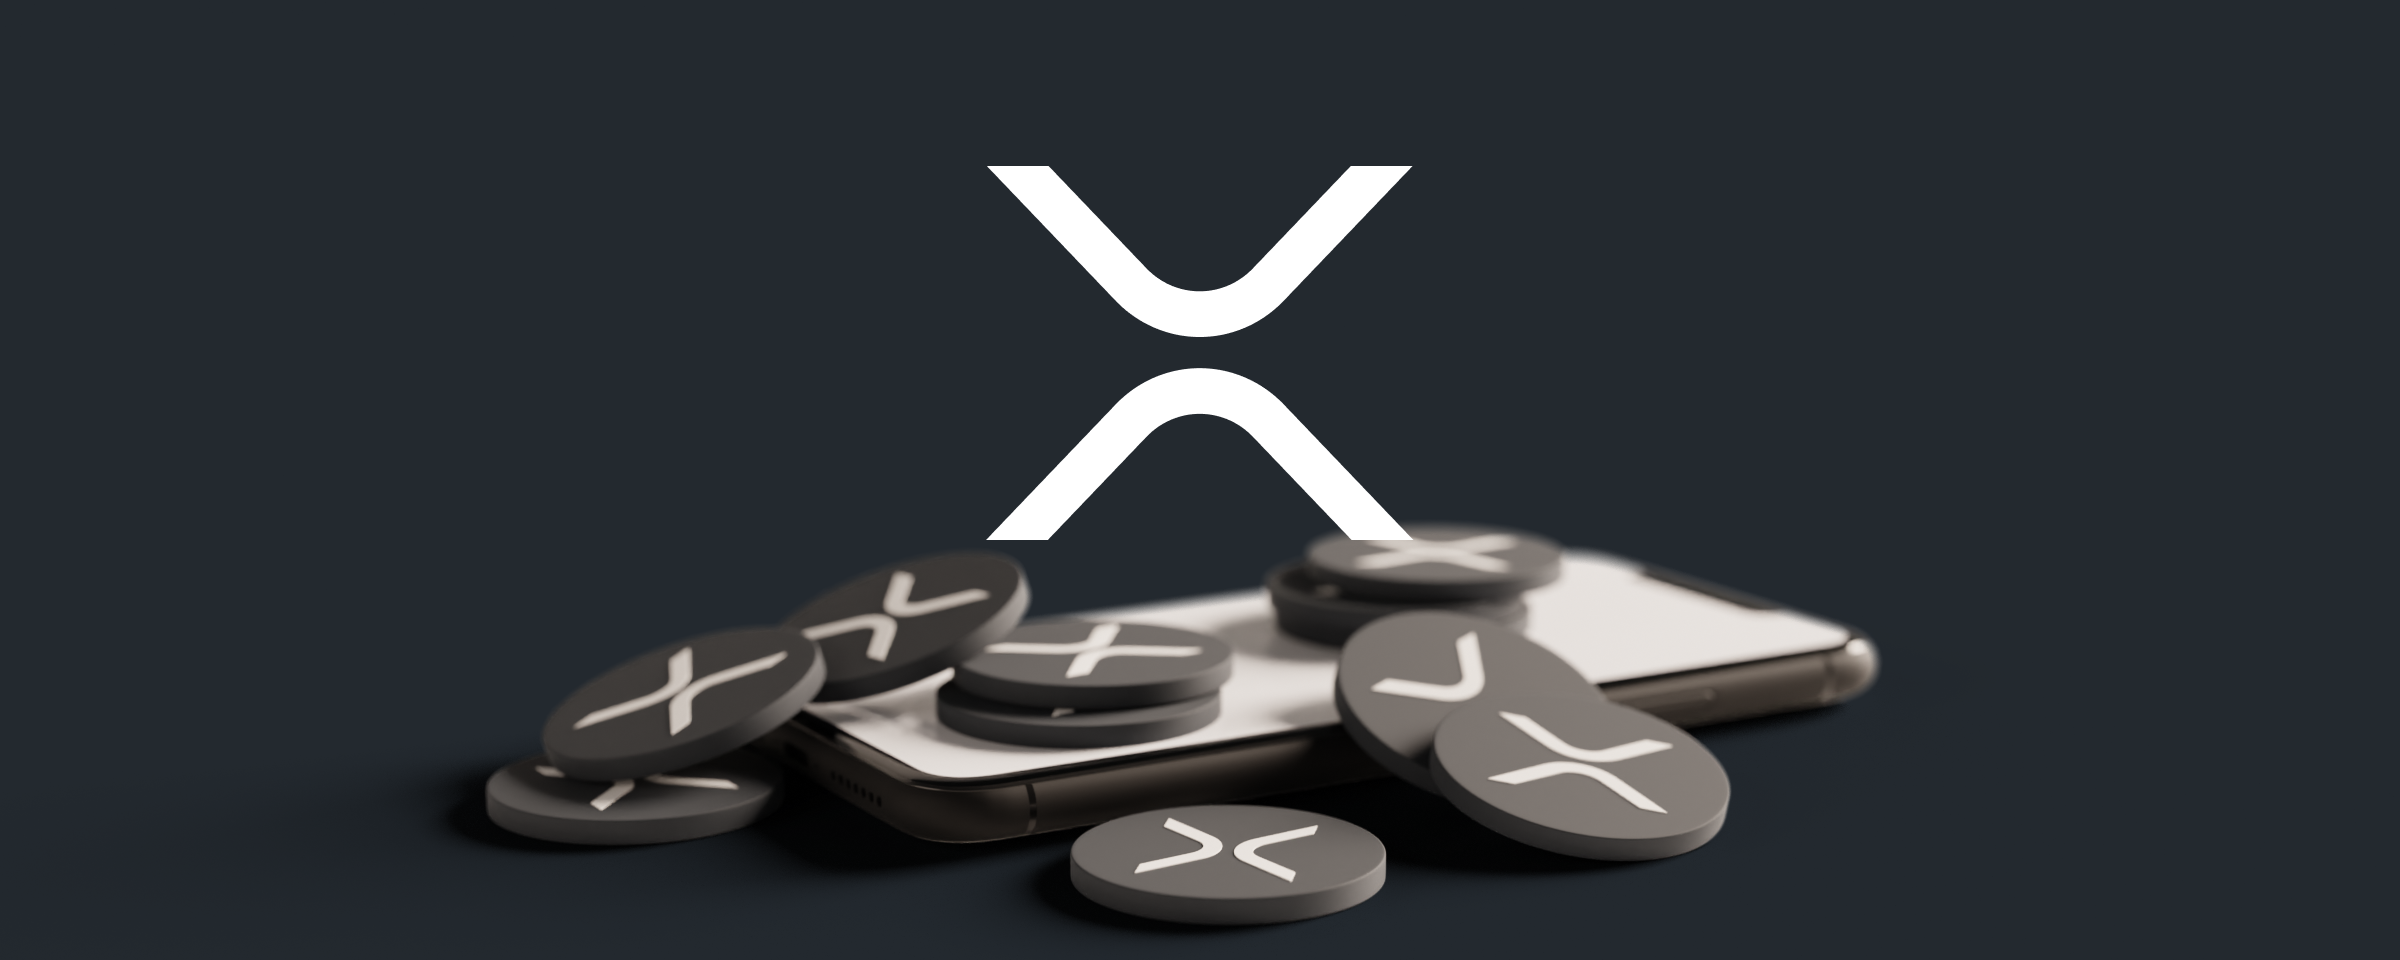 xrp coins og logo